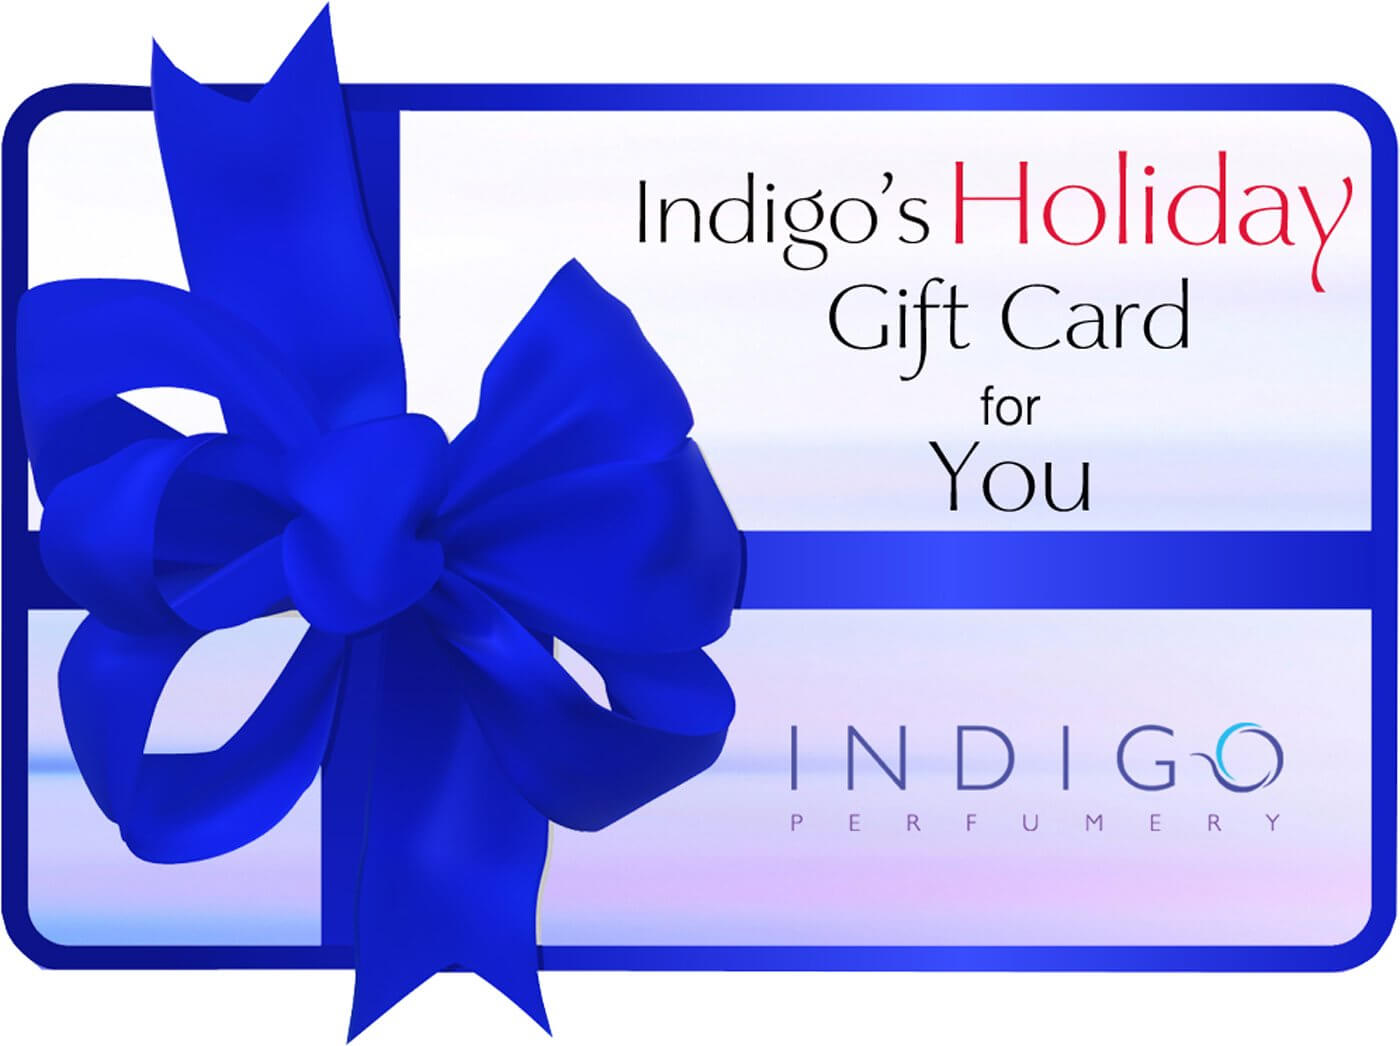 Indigo Perfumery Holiday Gift Card